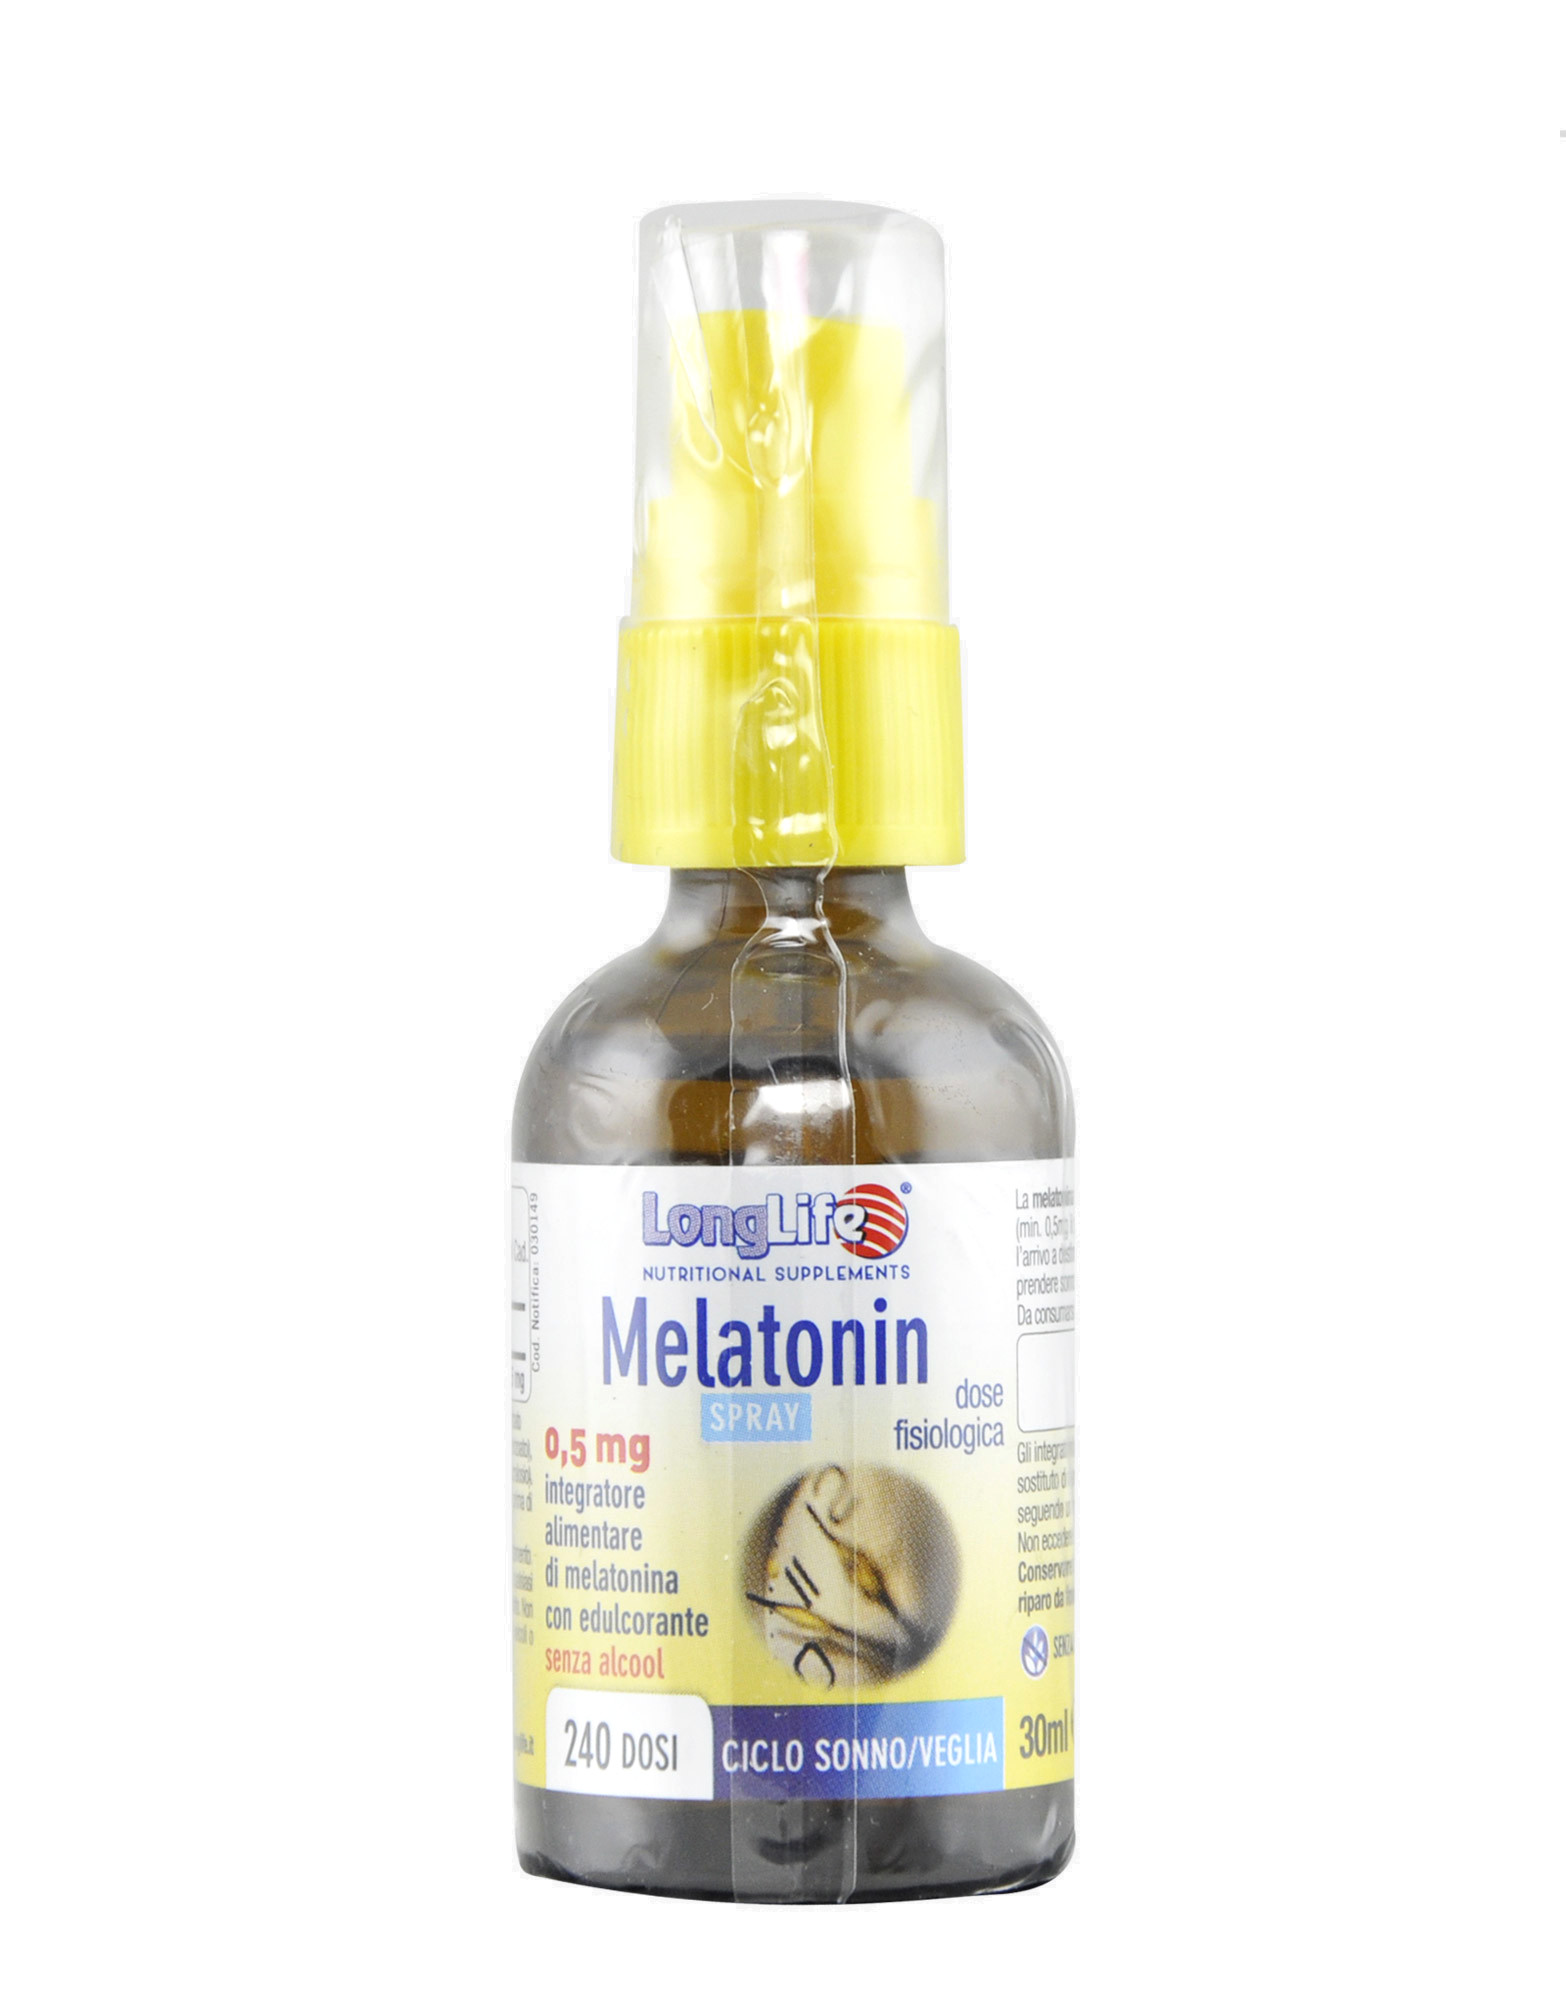 melatonin 0.5mg